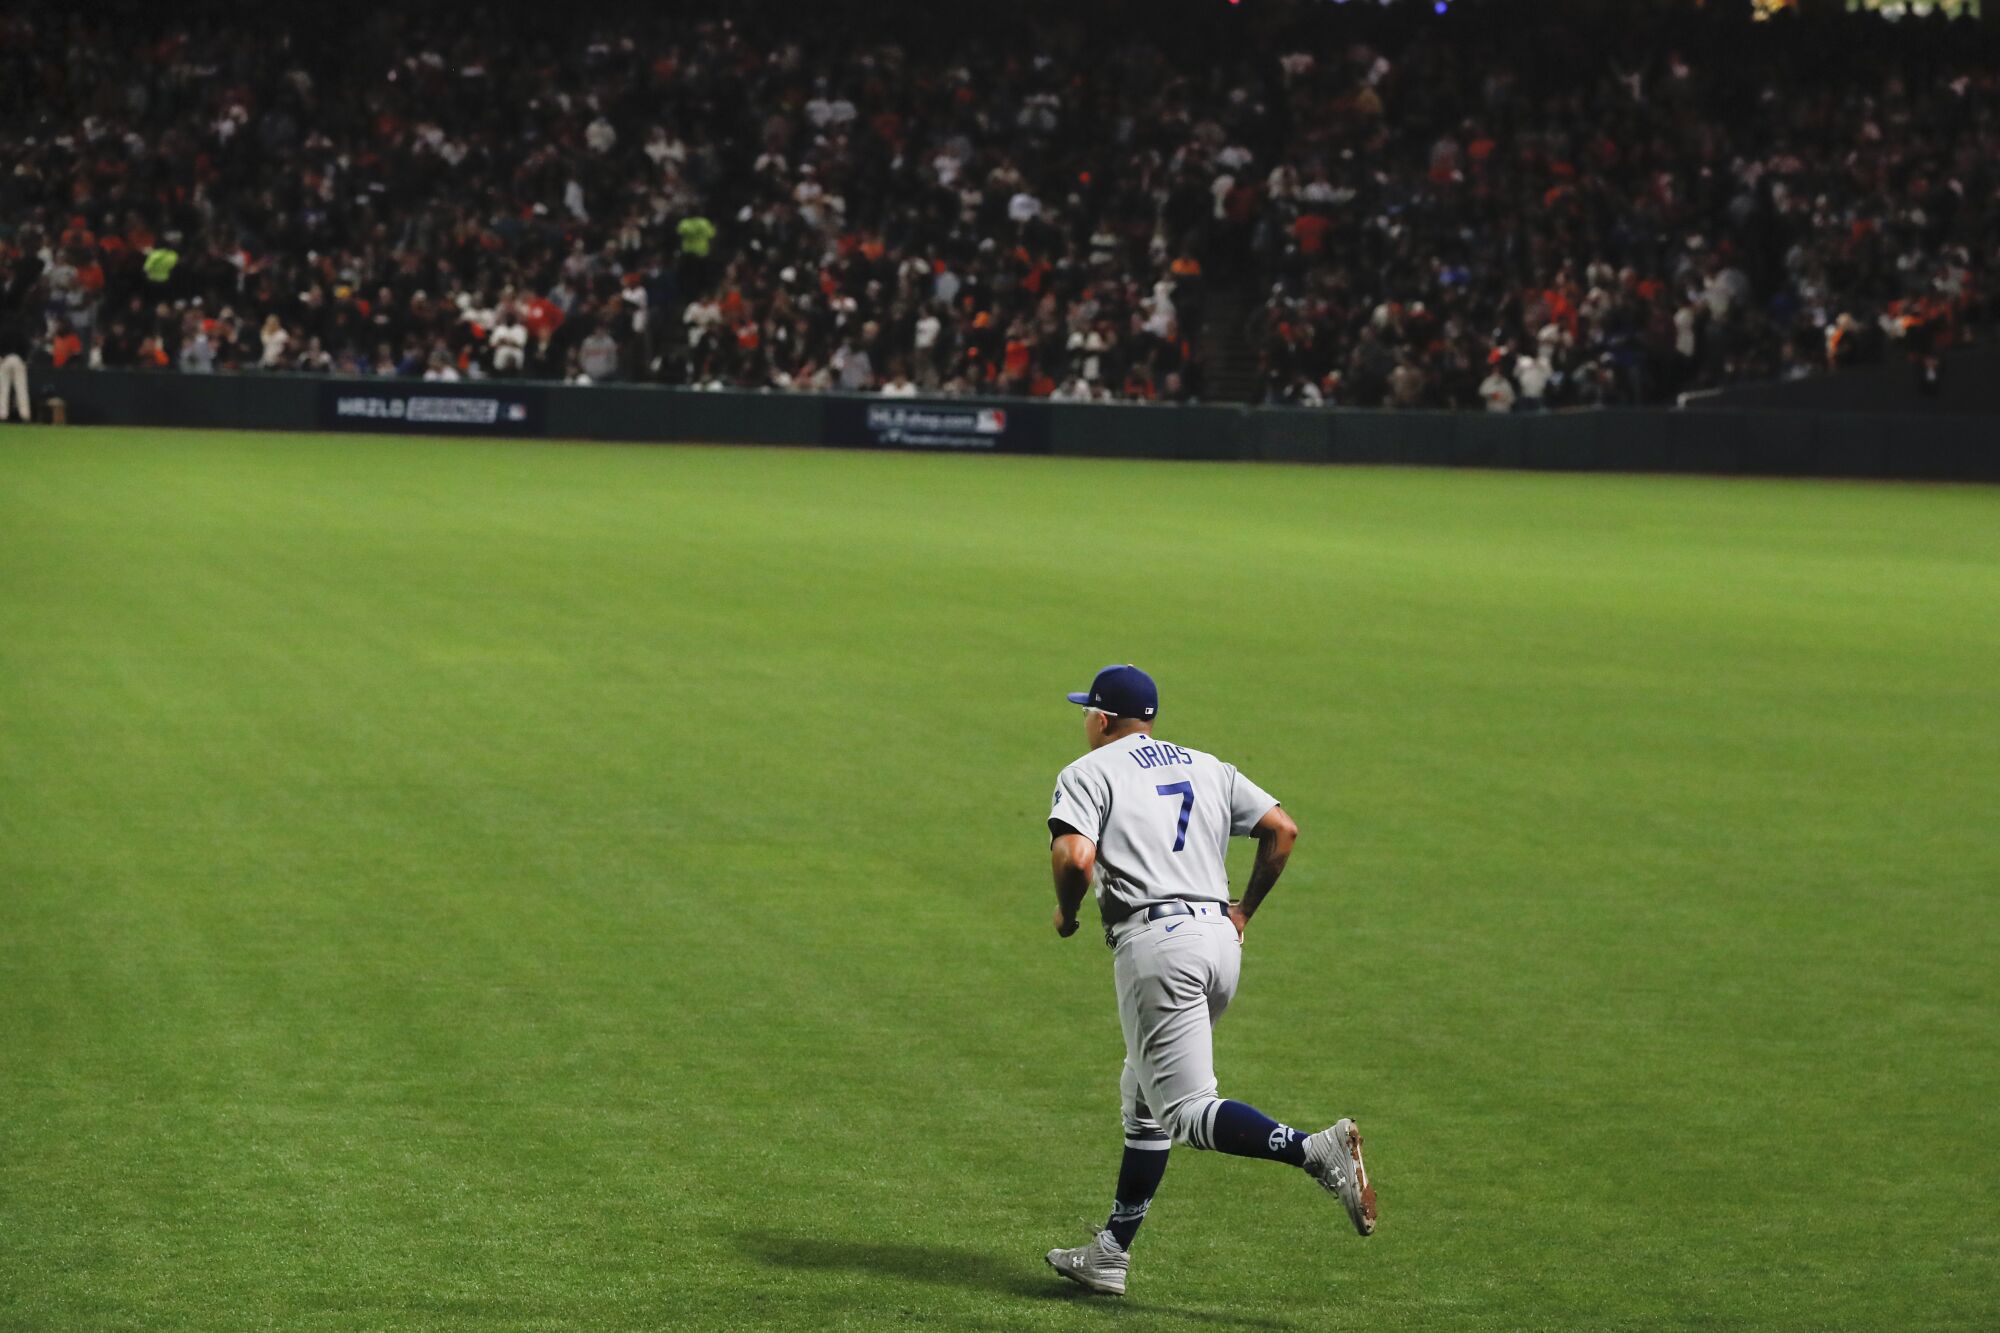 Dodgers pitcher Julio Urias runs onto the field